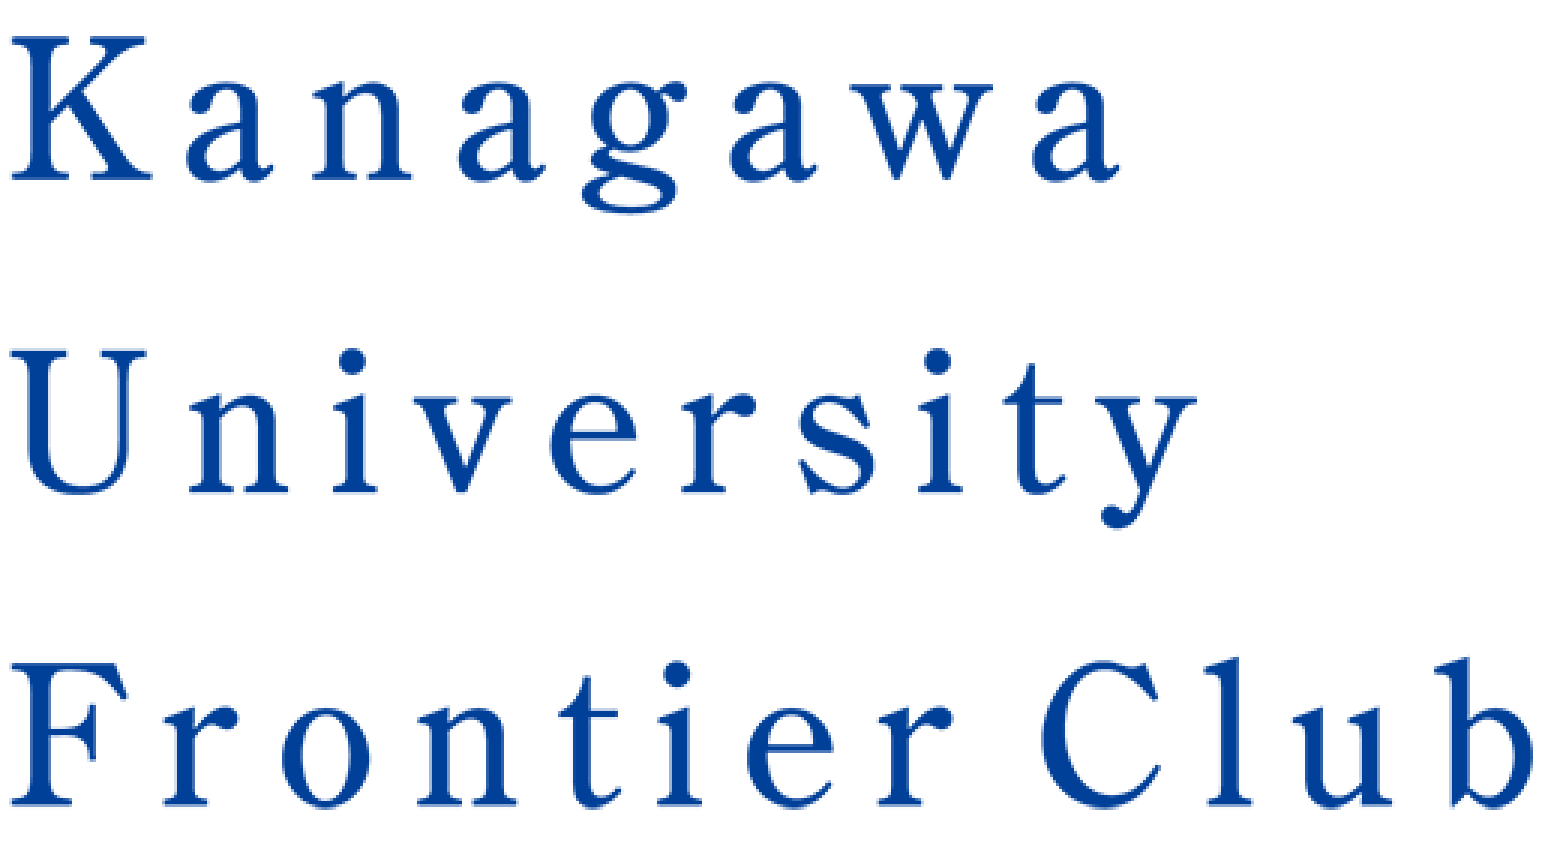  Kanagawa 
  University 
  Frontier Club